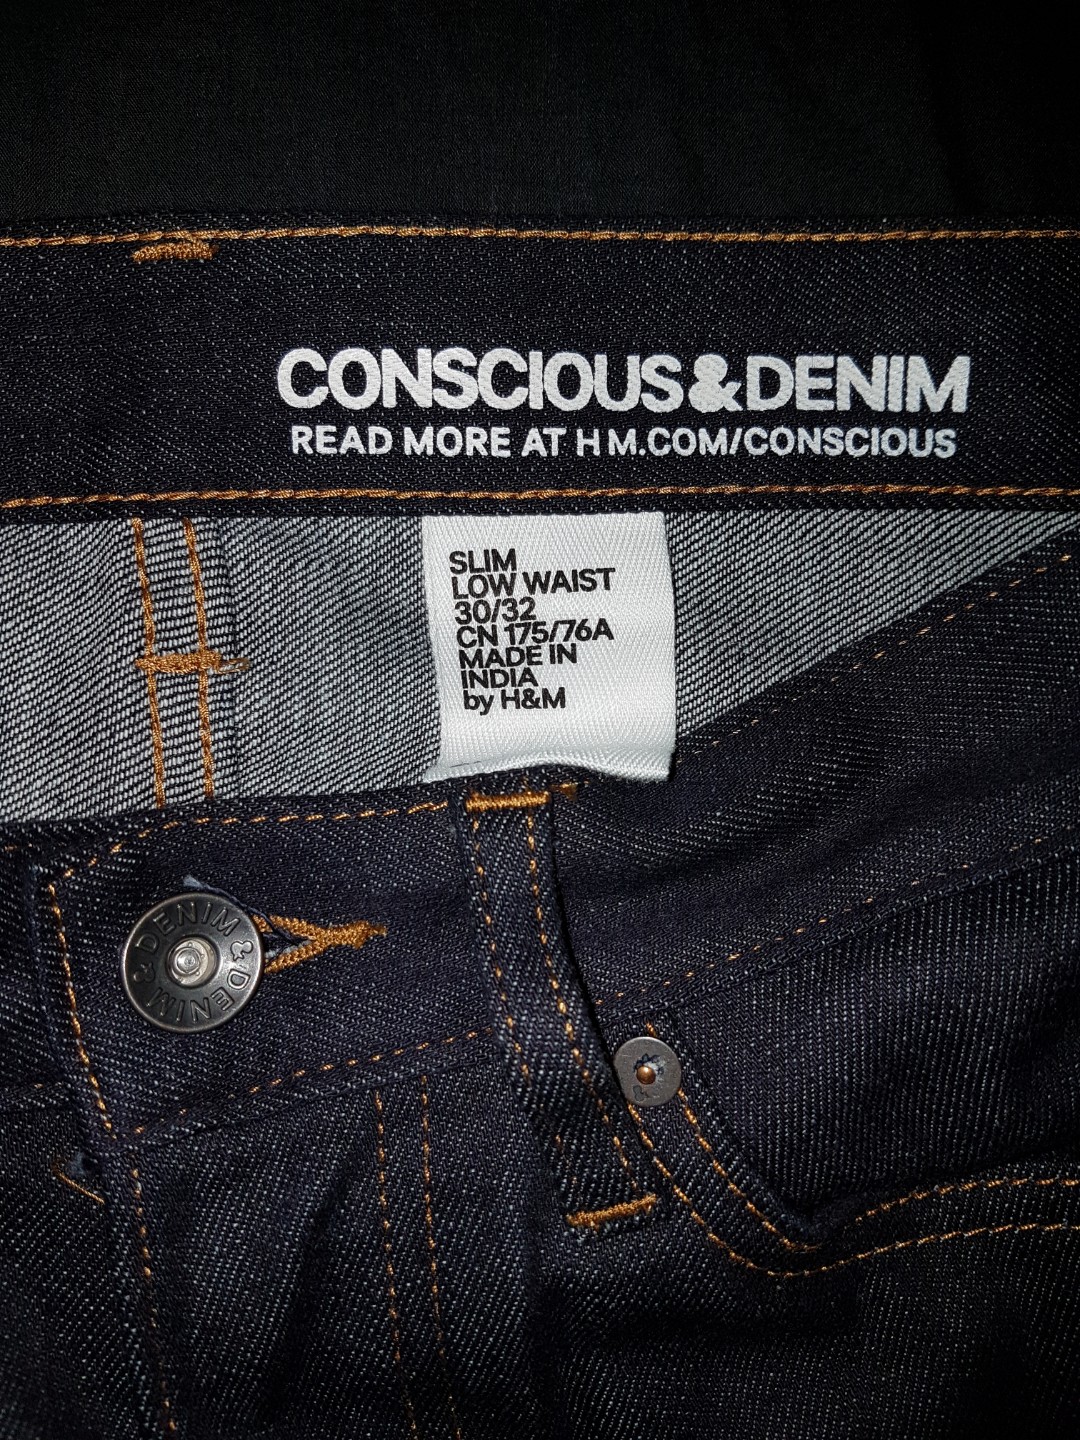 h&m slim low waist jeans